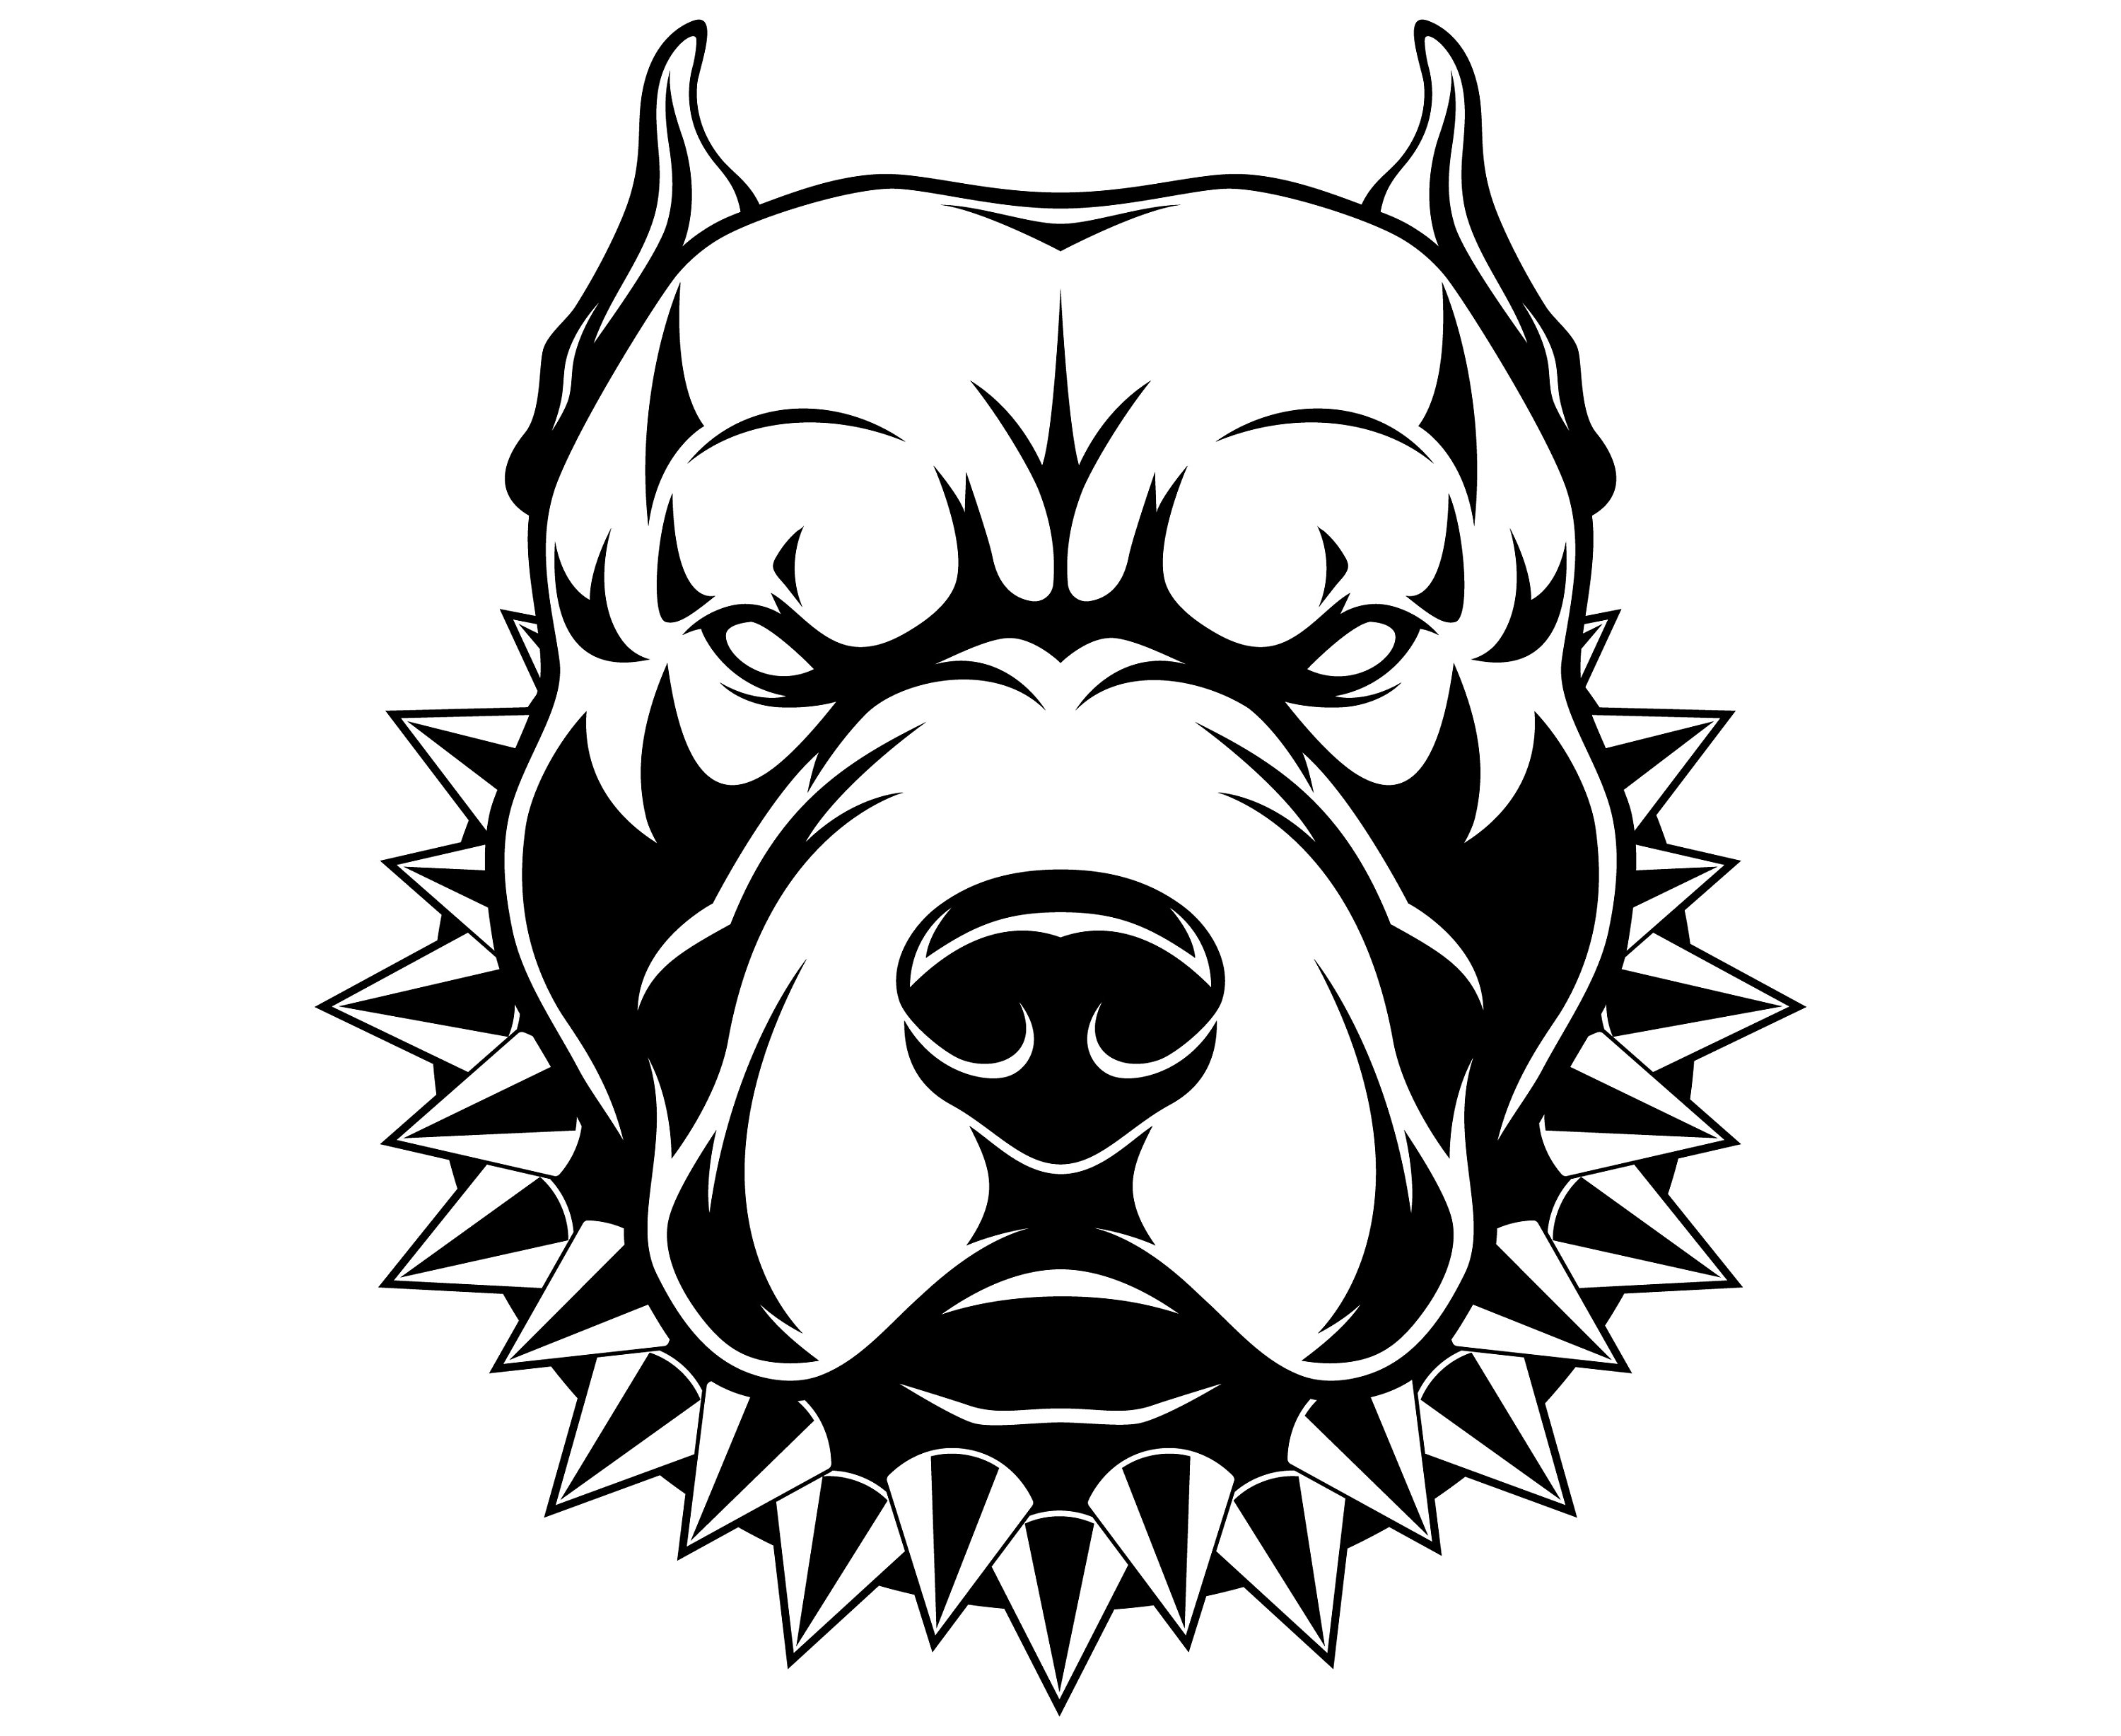 Download Pitbull SVG Pitbull silhouette Dog svg Pitbull clipart | Etsy